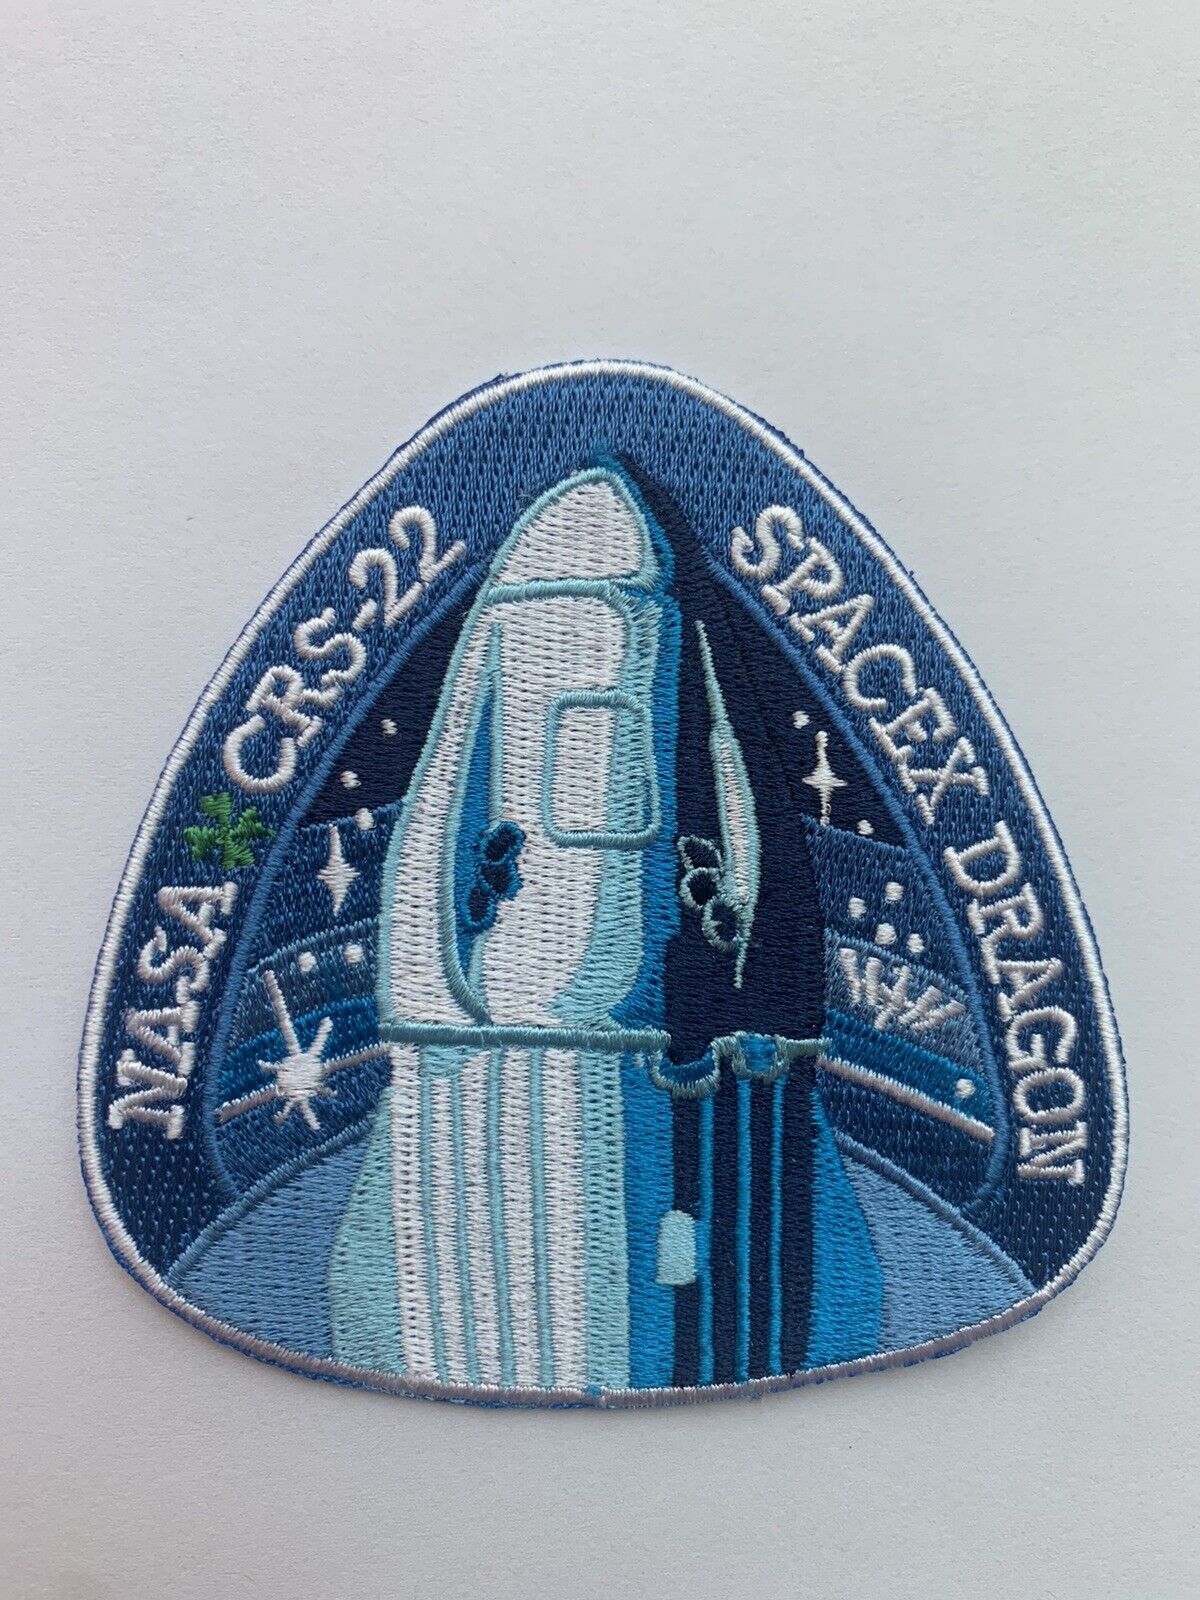 Original SpaceX CRS - 22 Dragon Falcon 9 Mission Patch NASA 2021  3.5”